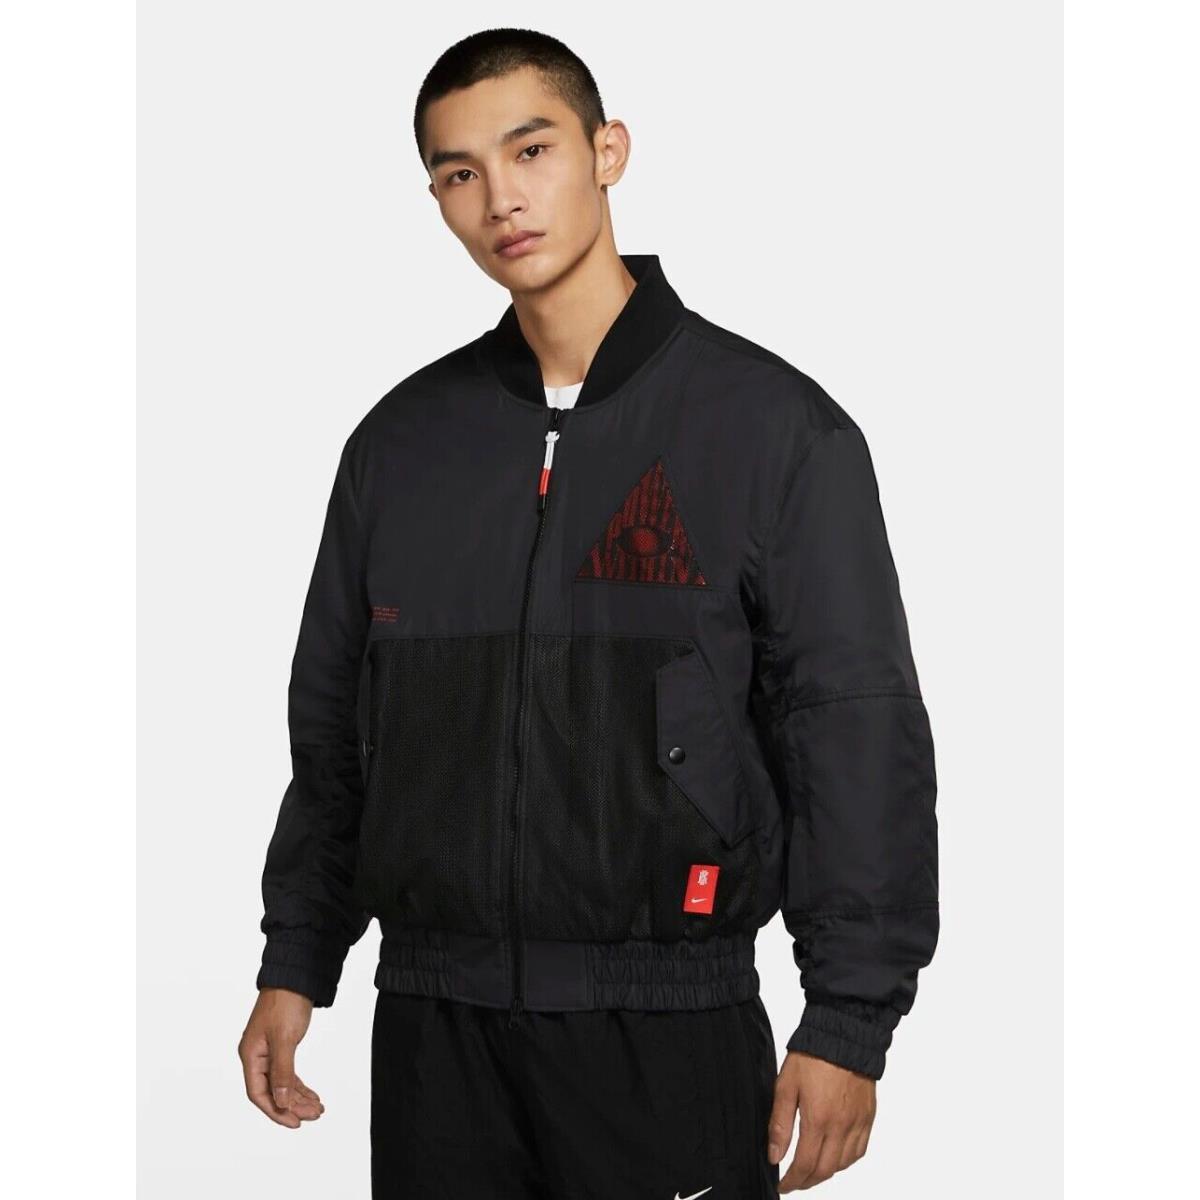 Nike Kyrie Protect Jacket Men s CK6670 010 Sample Black Size Large